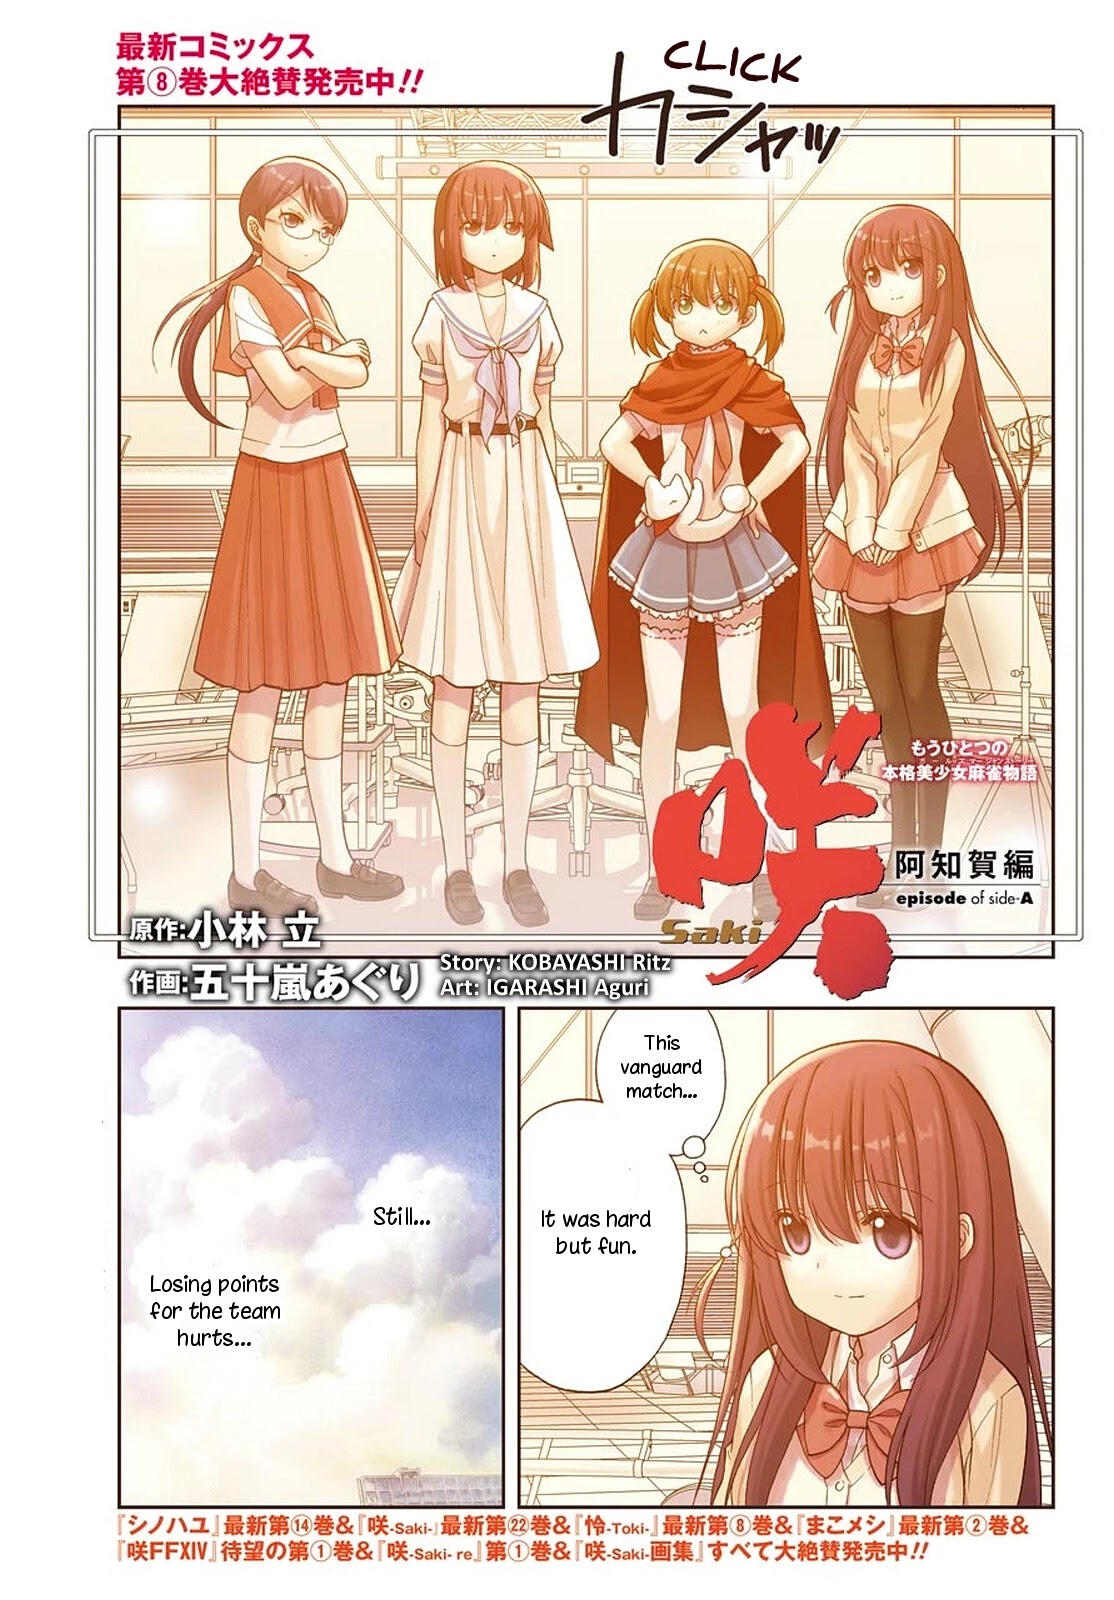 Saki: Achiga-Hen - Episode Of Side-A - New Series - Page 1